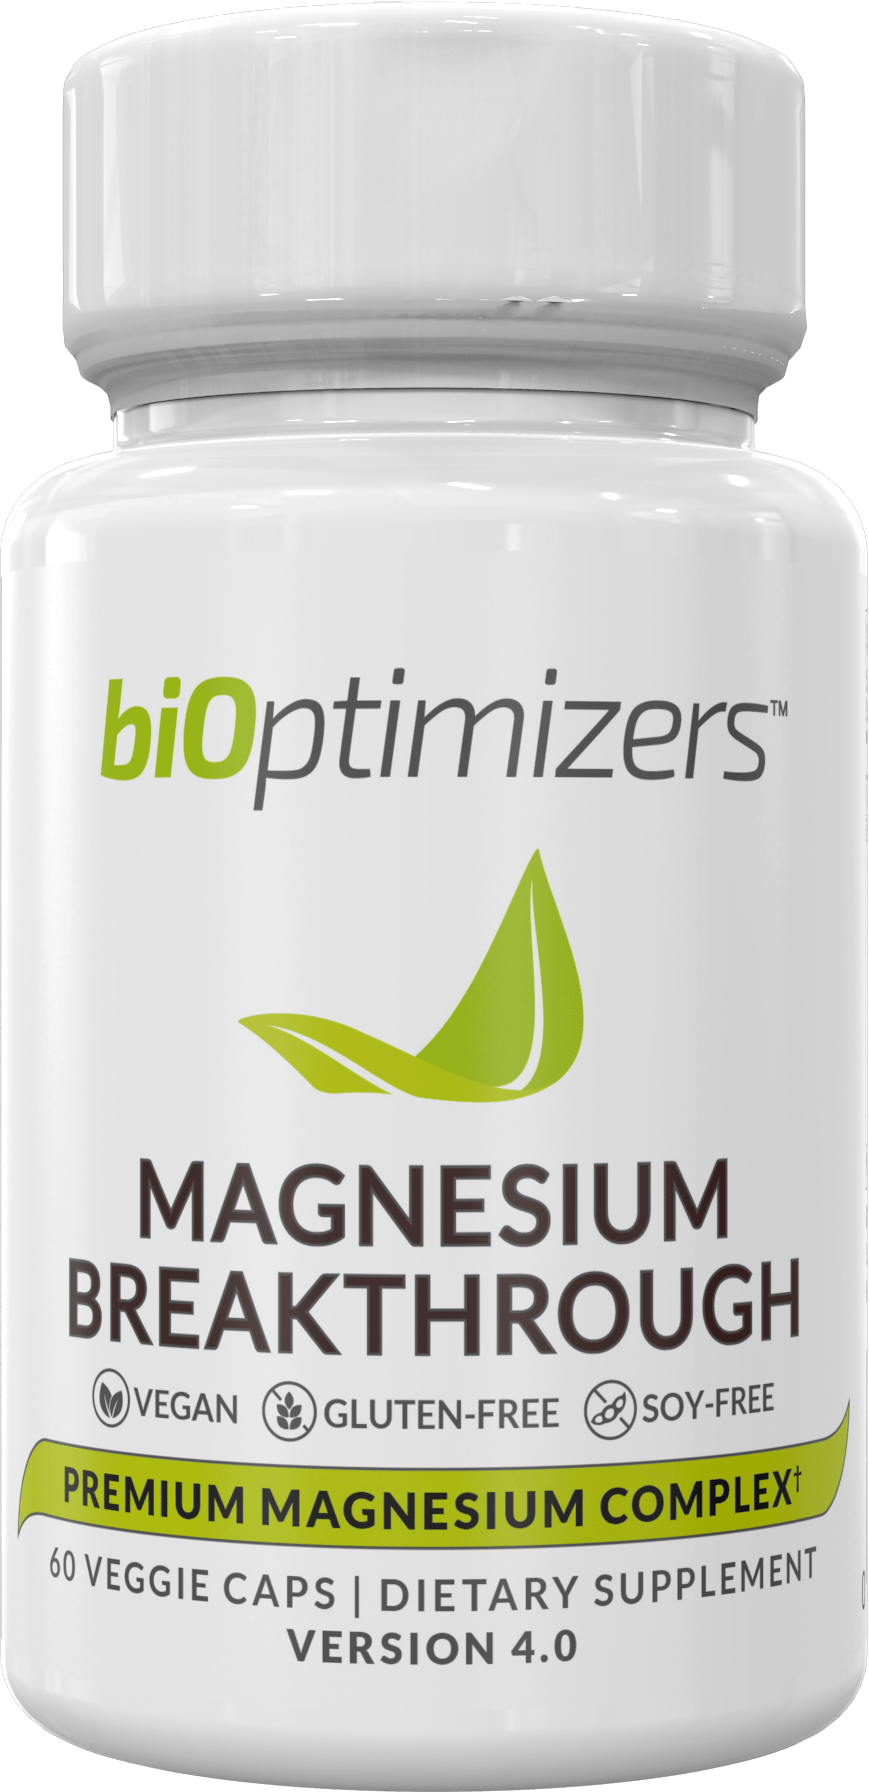 Bottle of Magnesium Breakthrough